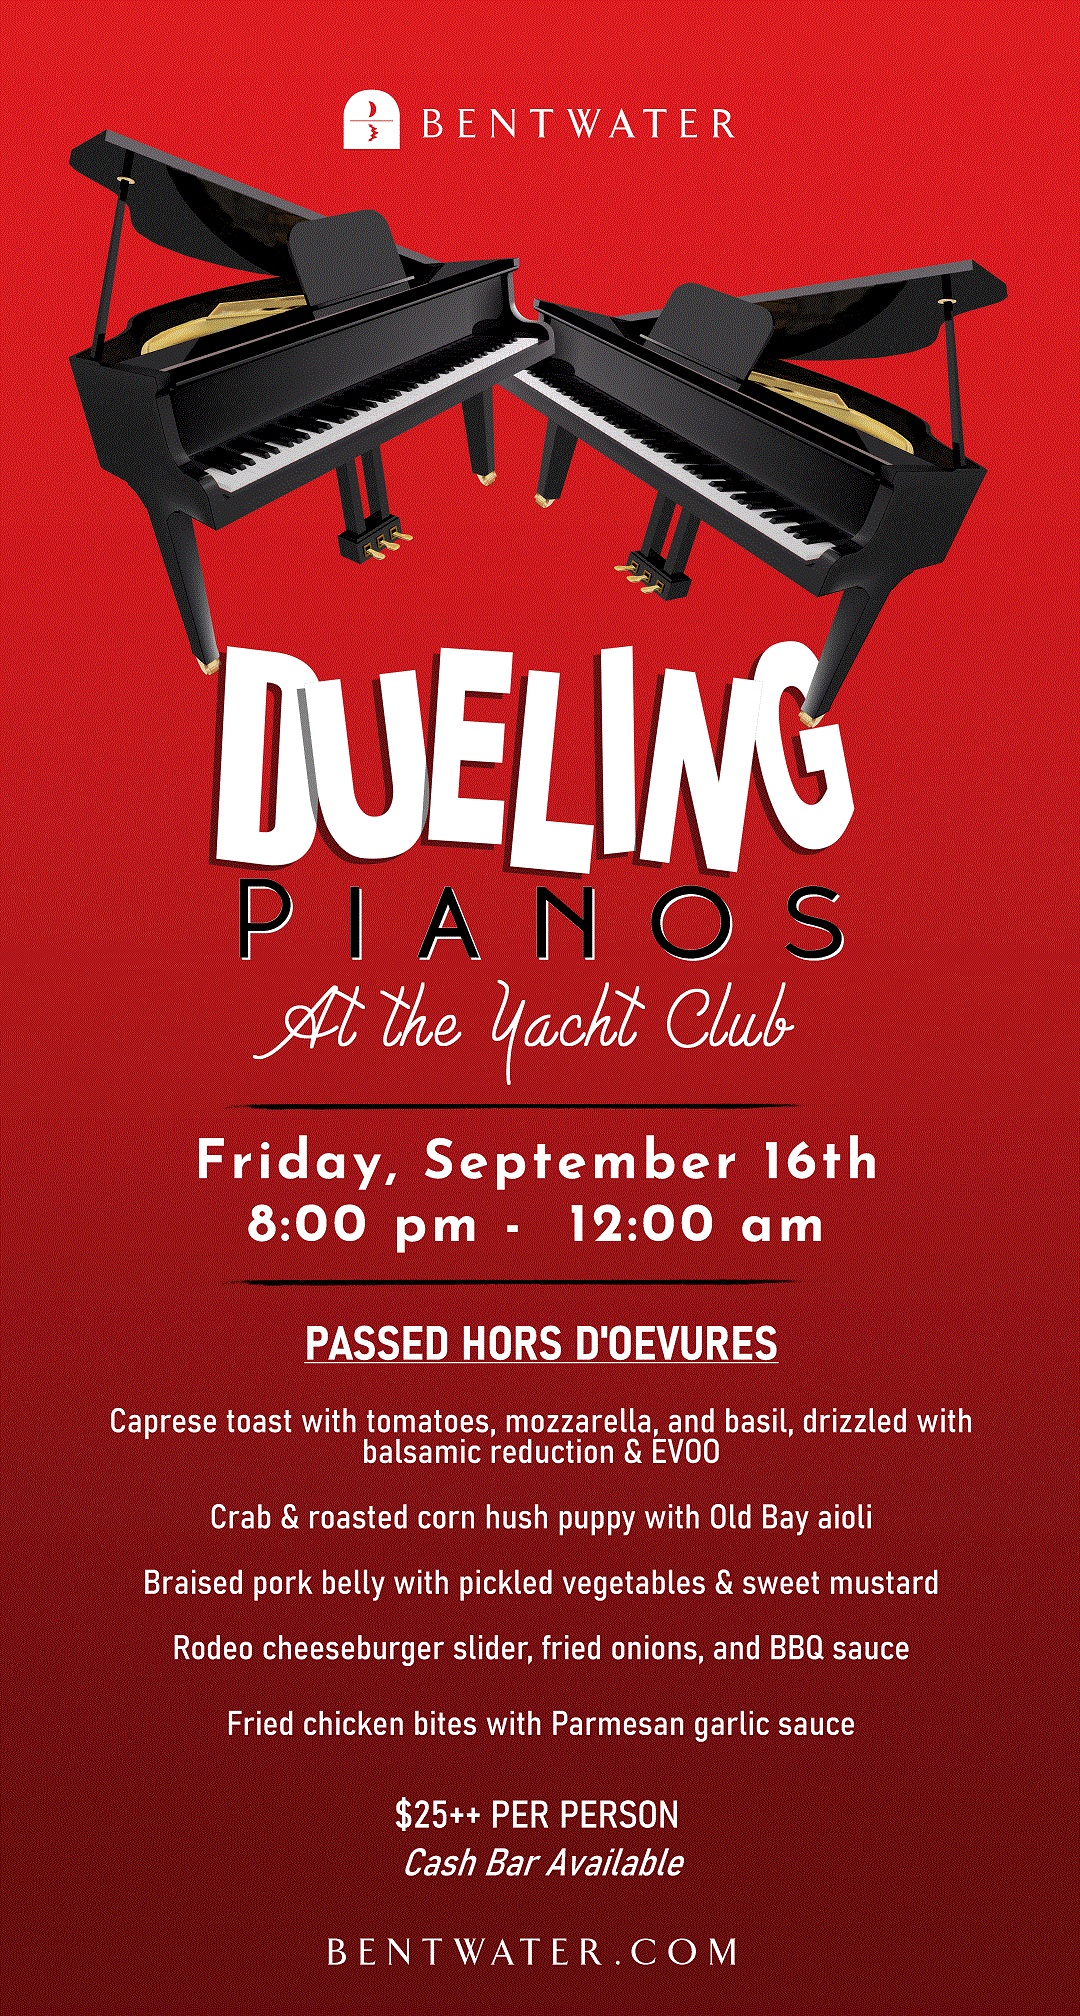 danversport yacht club dueling pianos